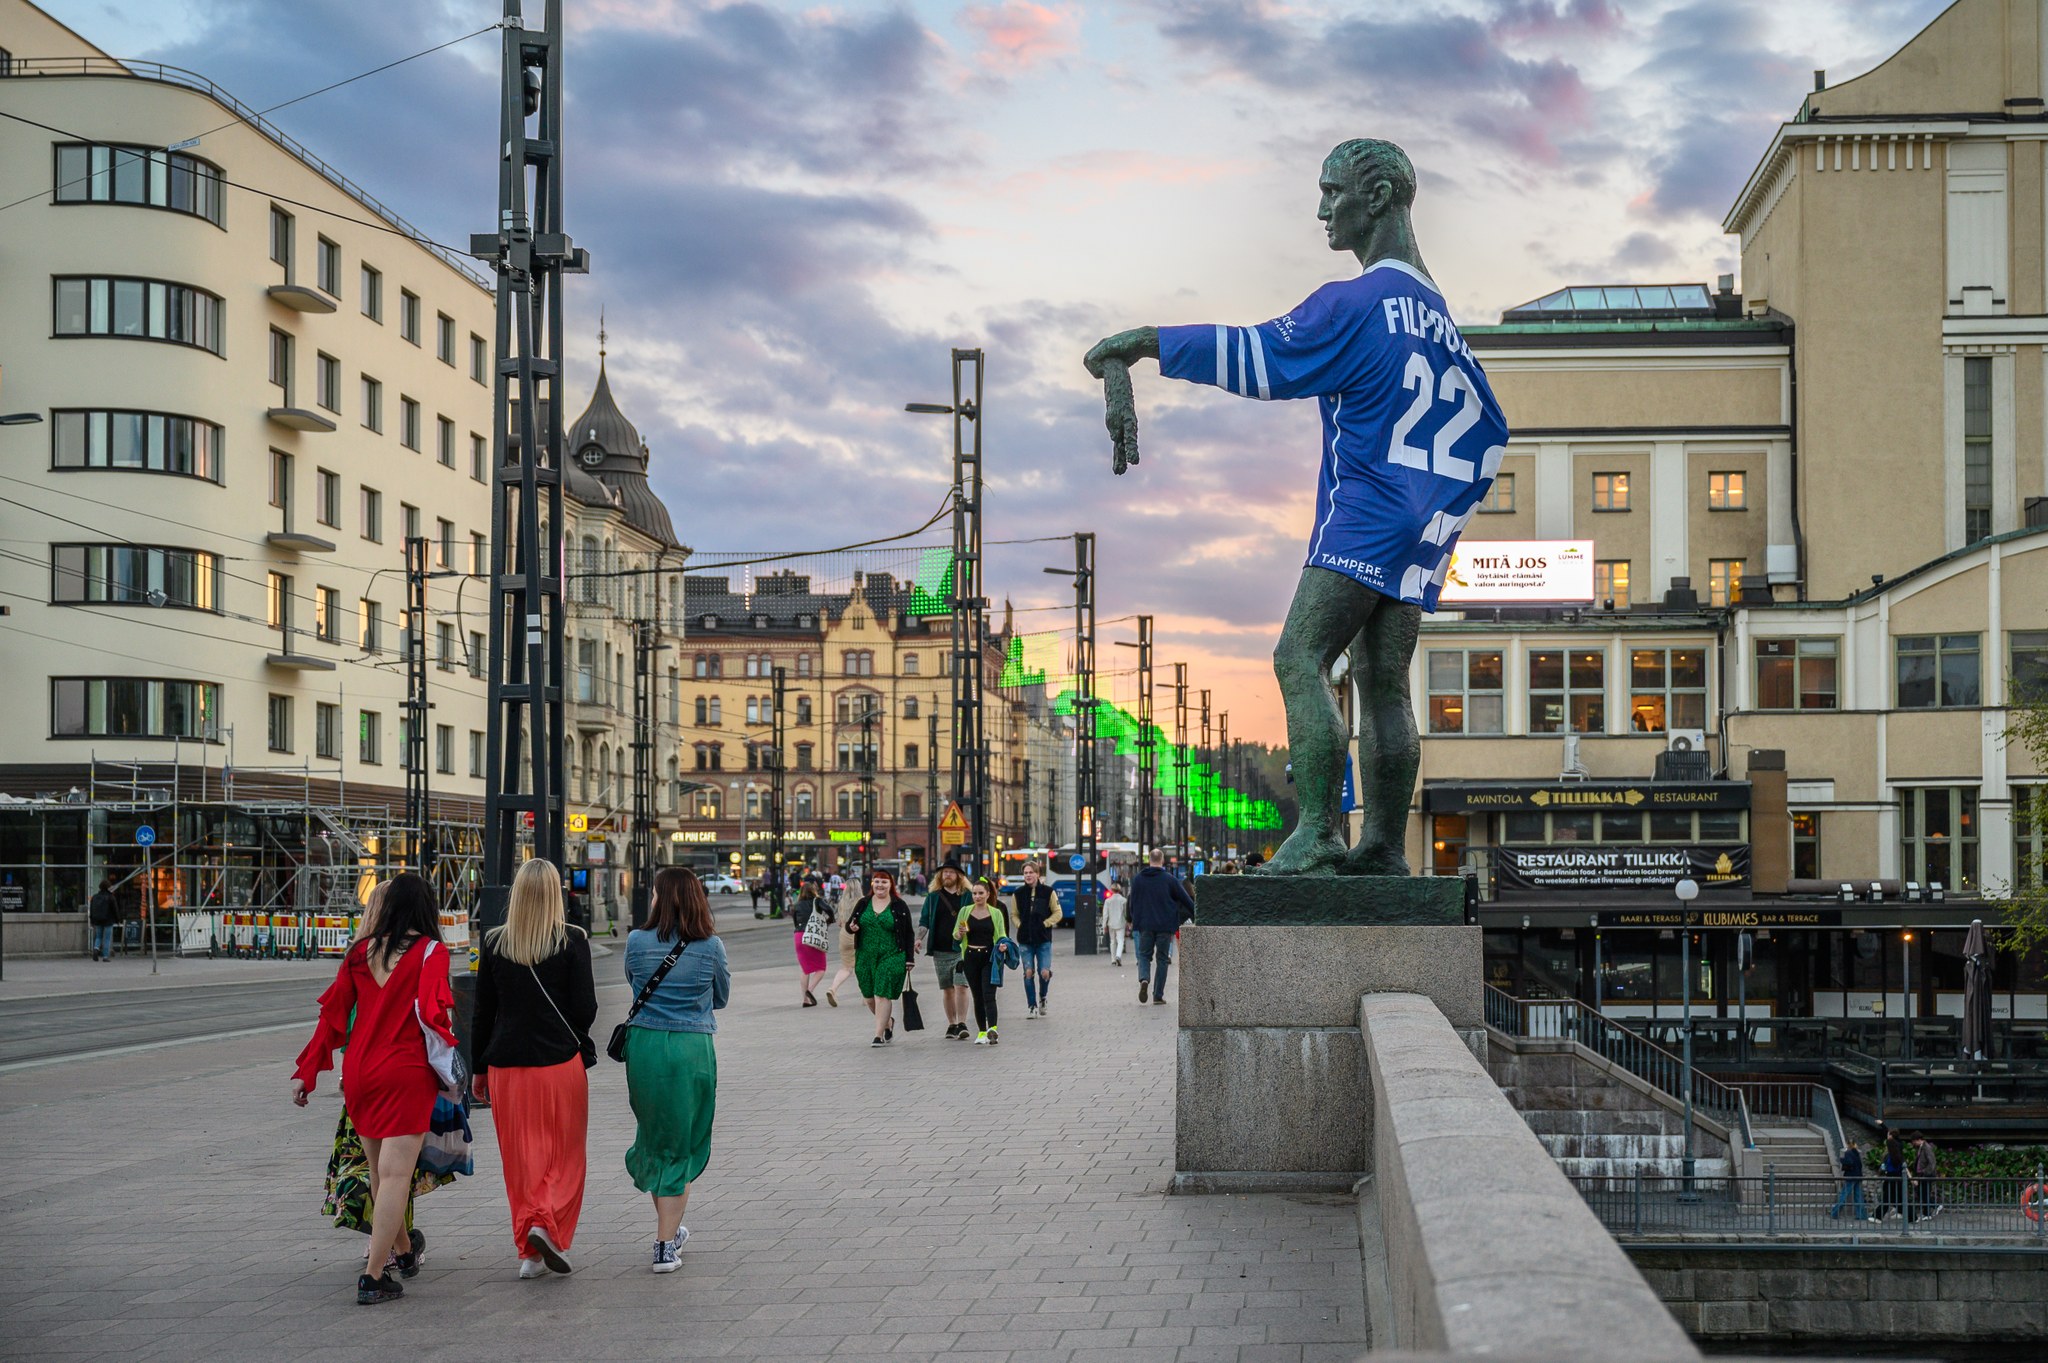 Hämeensilta bridges statue dressed up in a blue jersey.